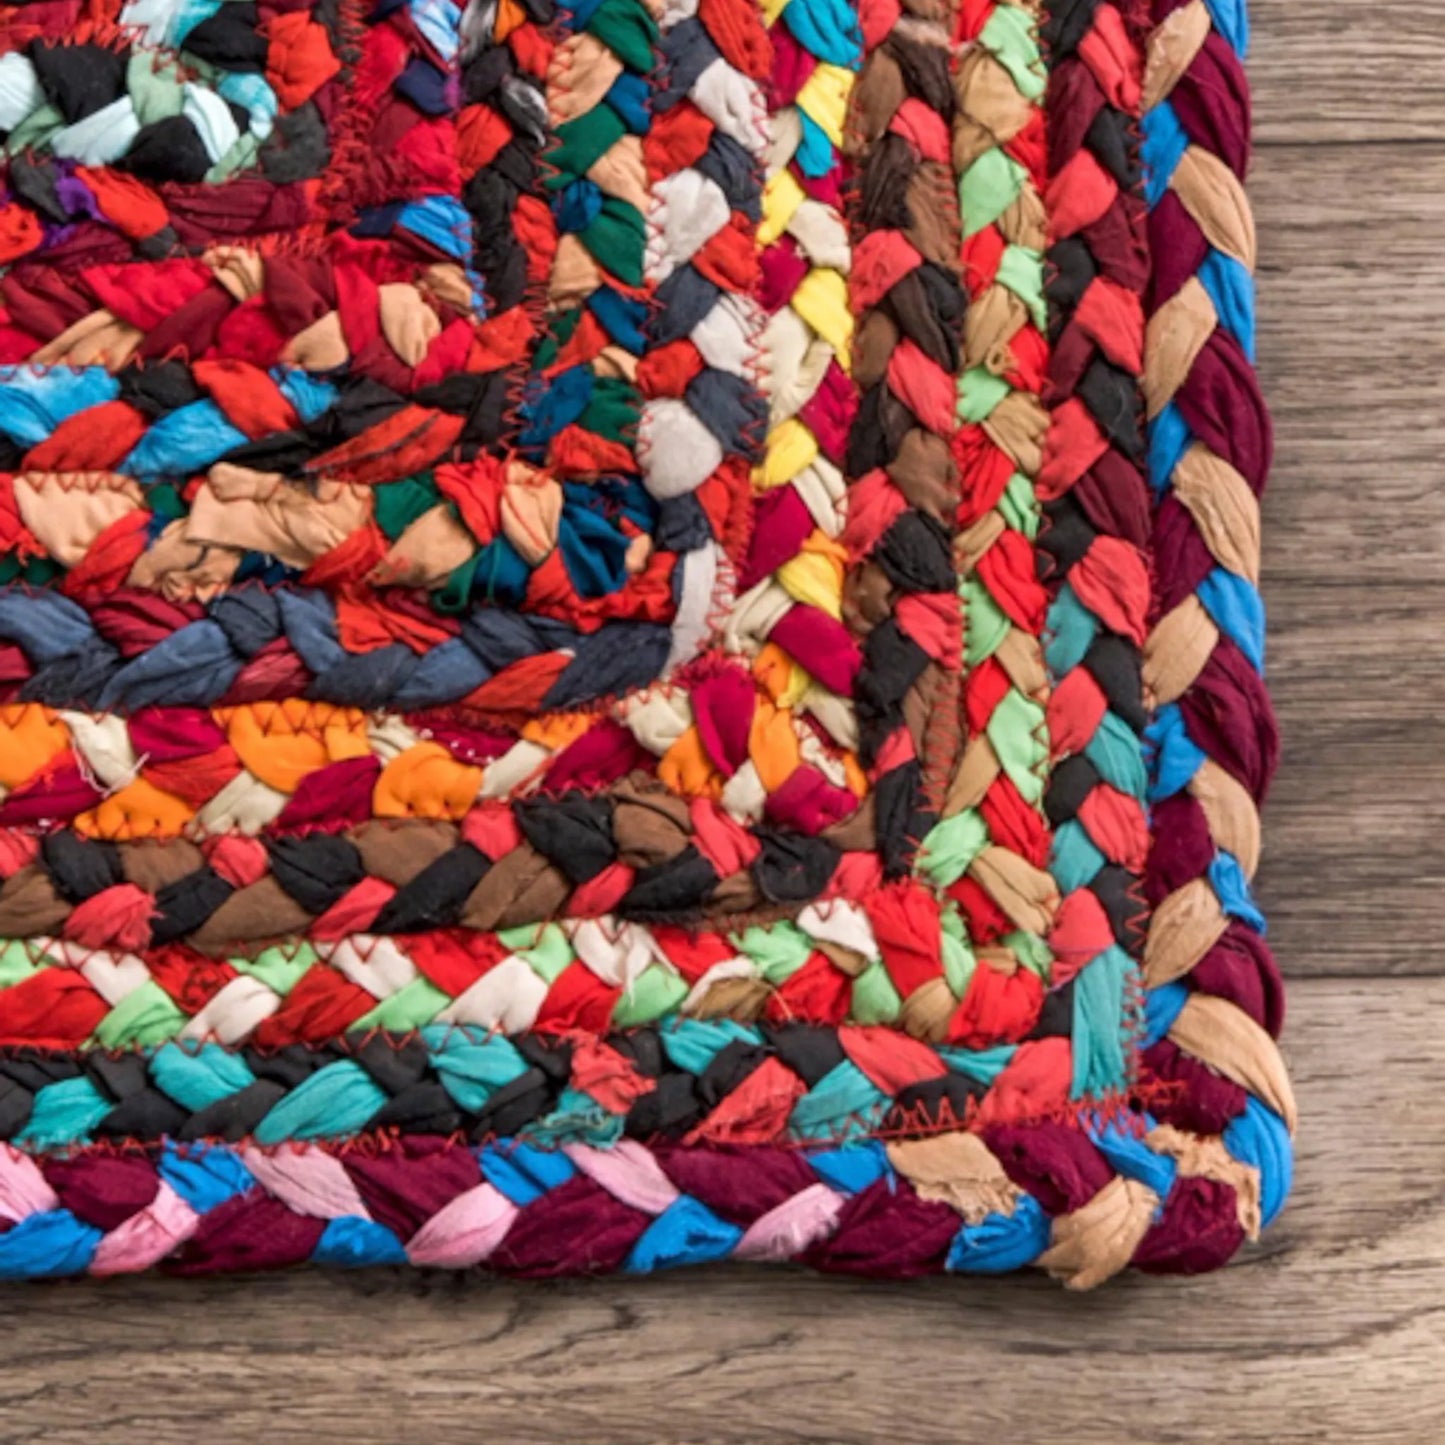 Avioni Home Premium Collection – Contemporary Braided Rag Rug – Colorful Cotton Chindi